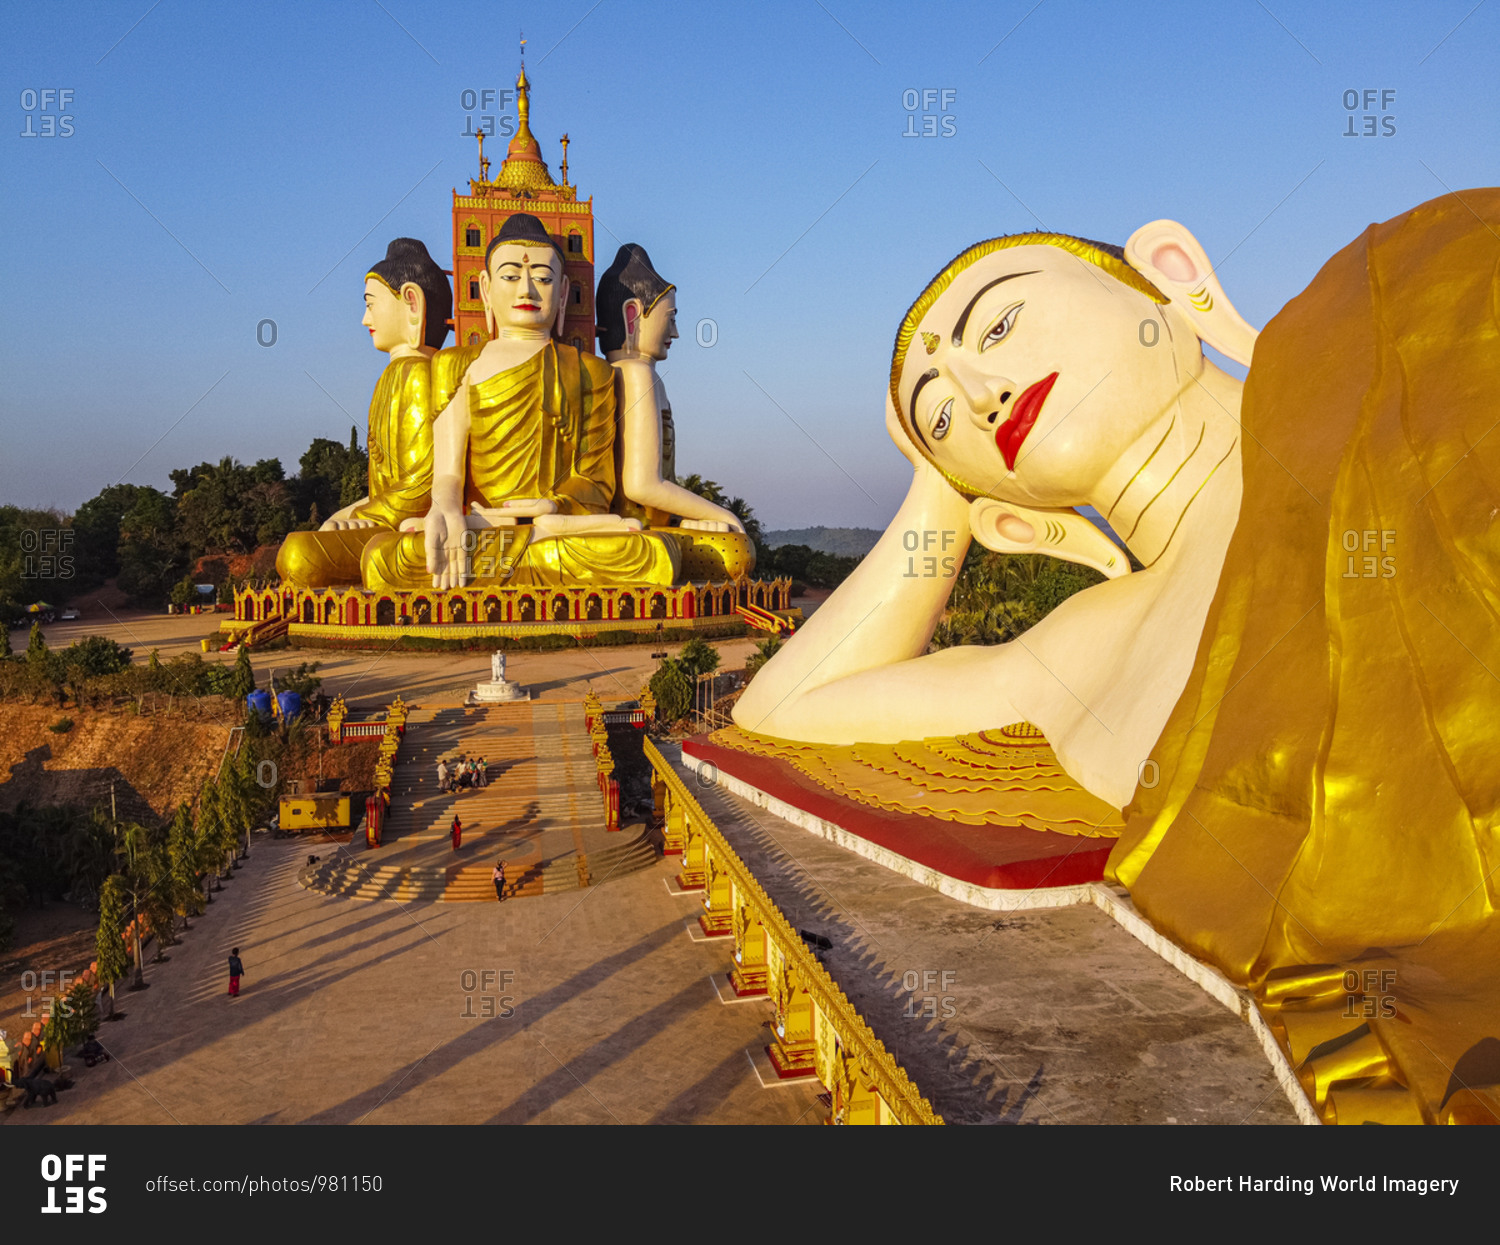 Aerial of the huge sitting and reclining Buddhas, Ko Yin Lay, Pupawadoy Monastery near Ye, Mon state, Myanmar (Burma), Asia